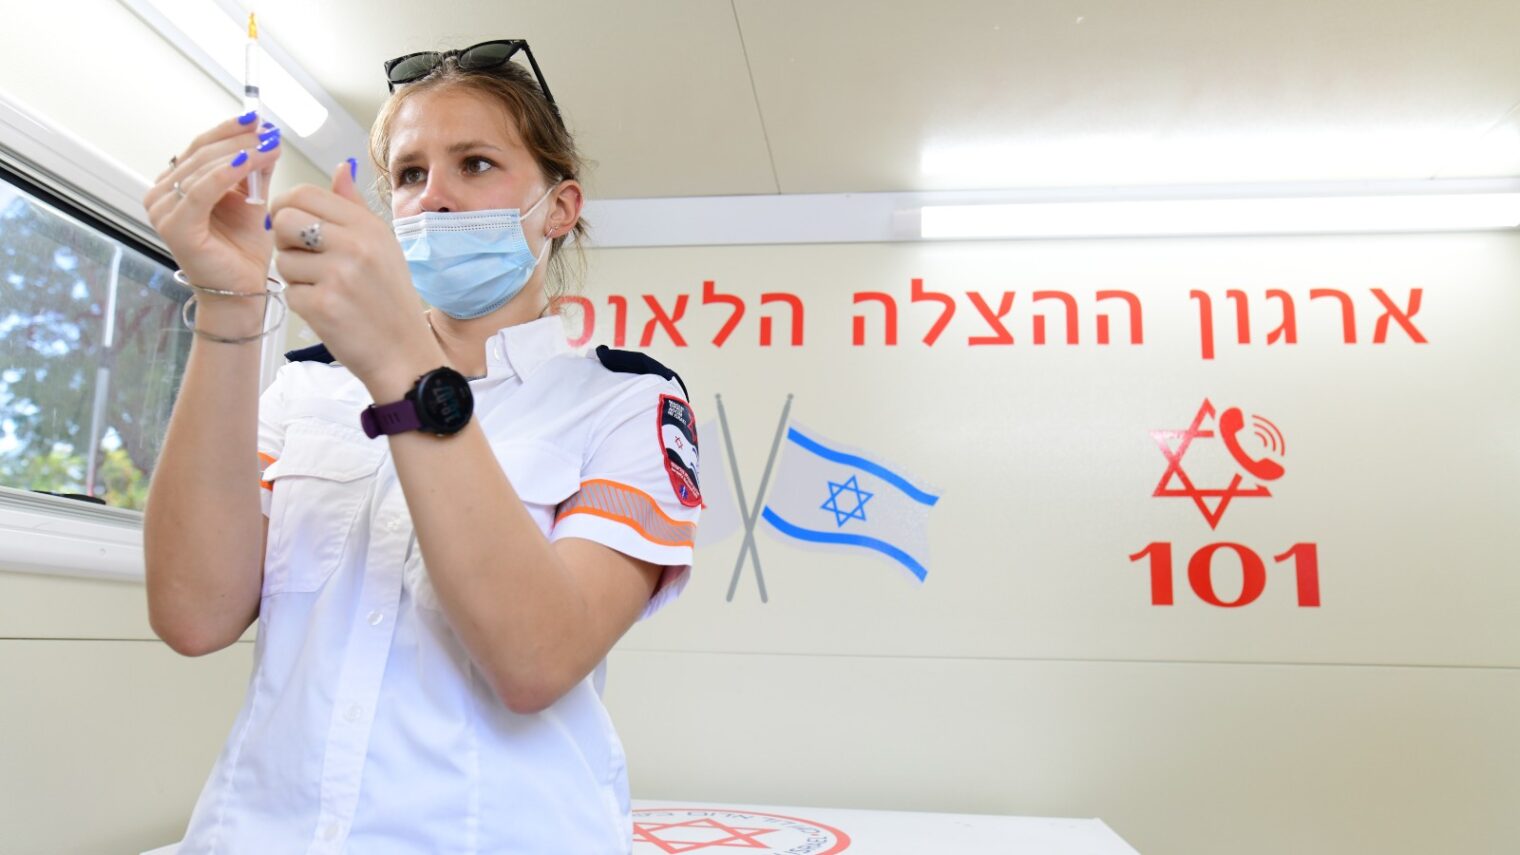 A health worker preparing a Covid-19 vaccine in Tel Aviv, July 4, 2021. Photo by Tomer Neuberg/Flash90